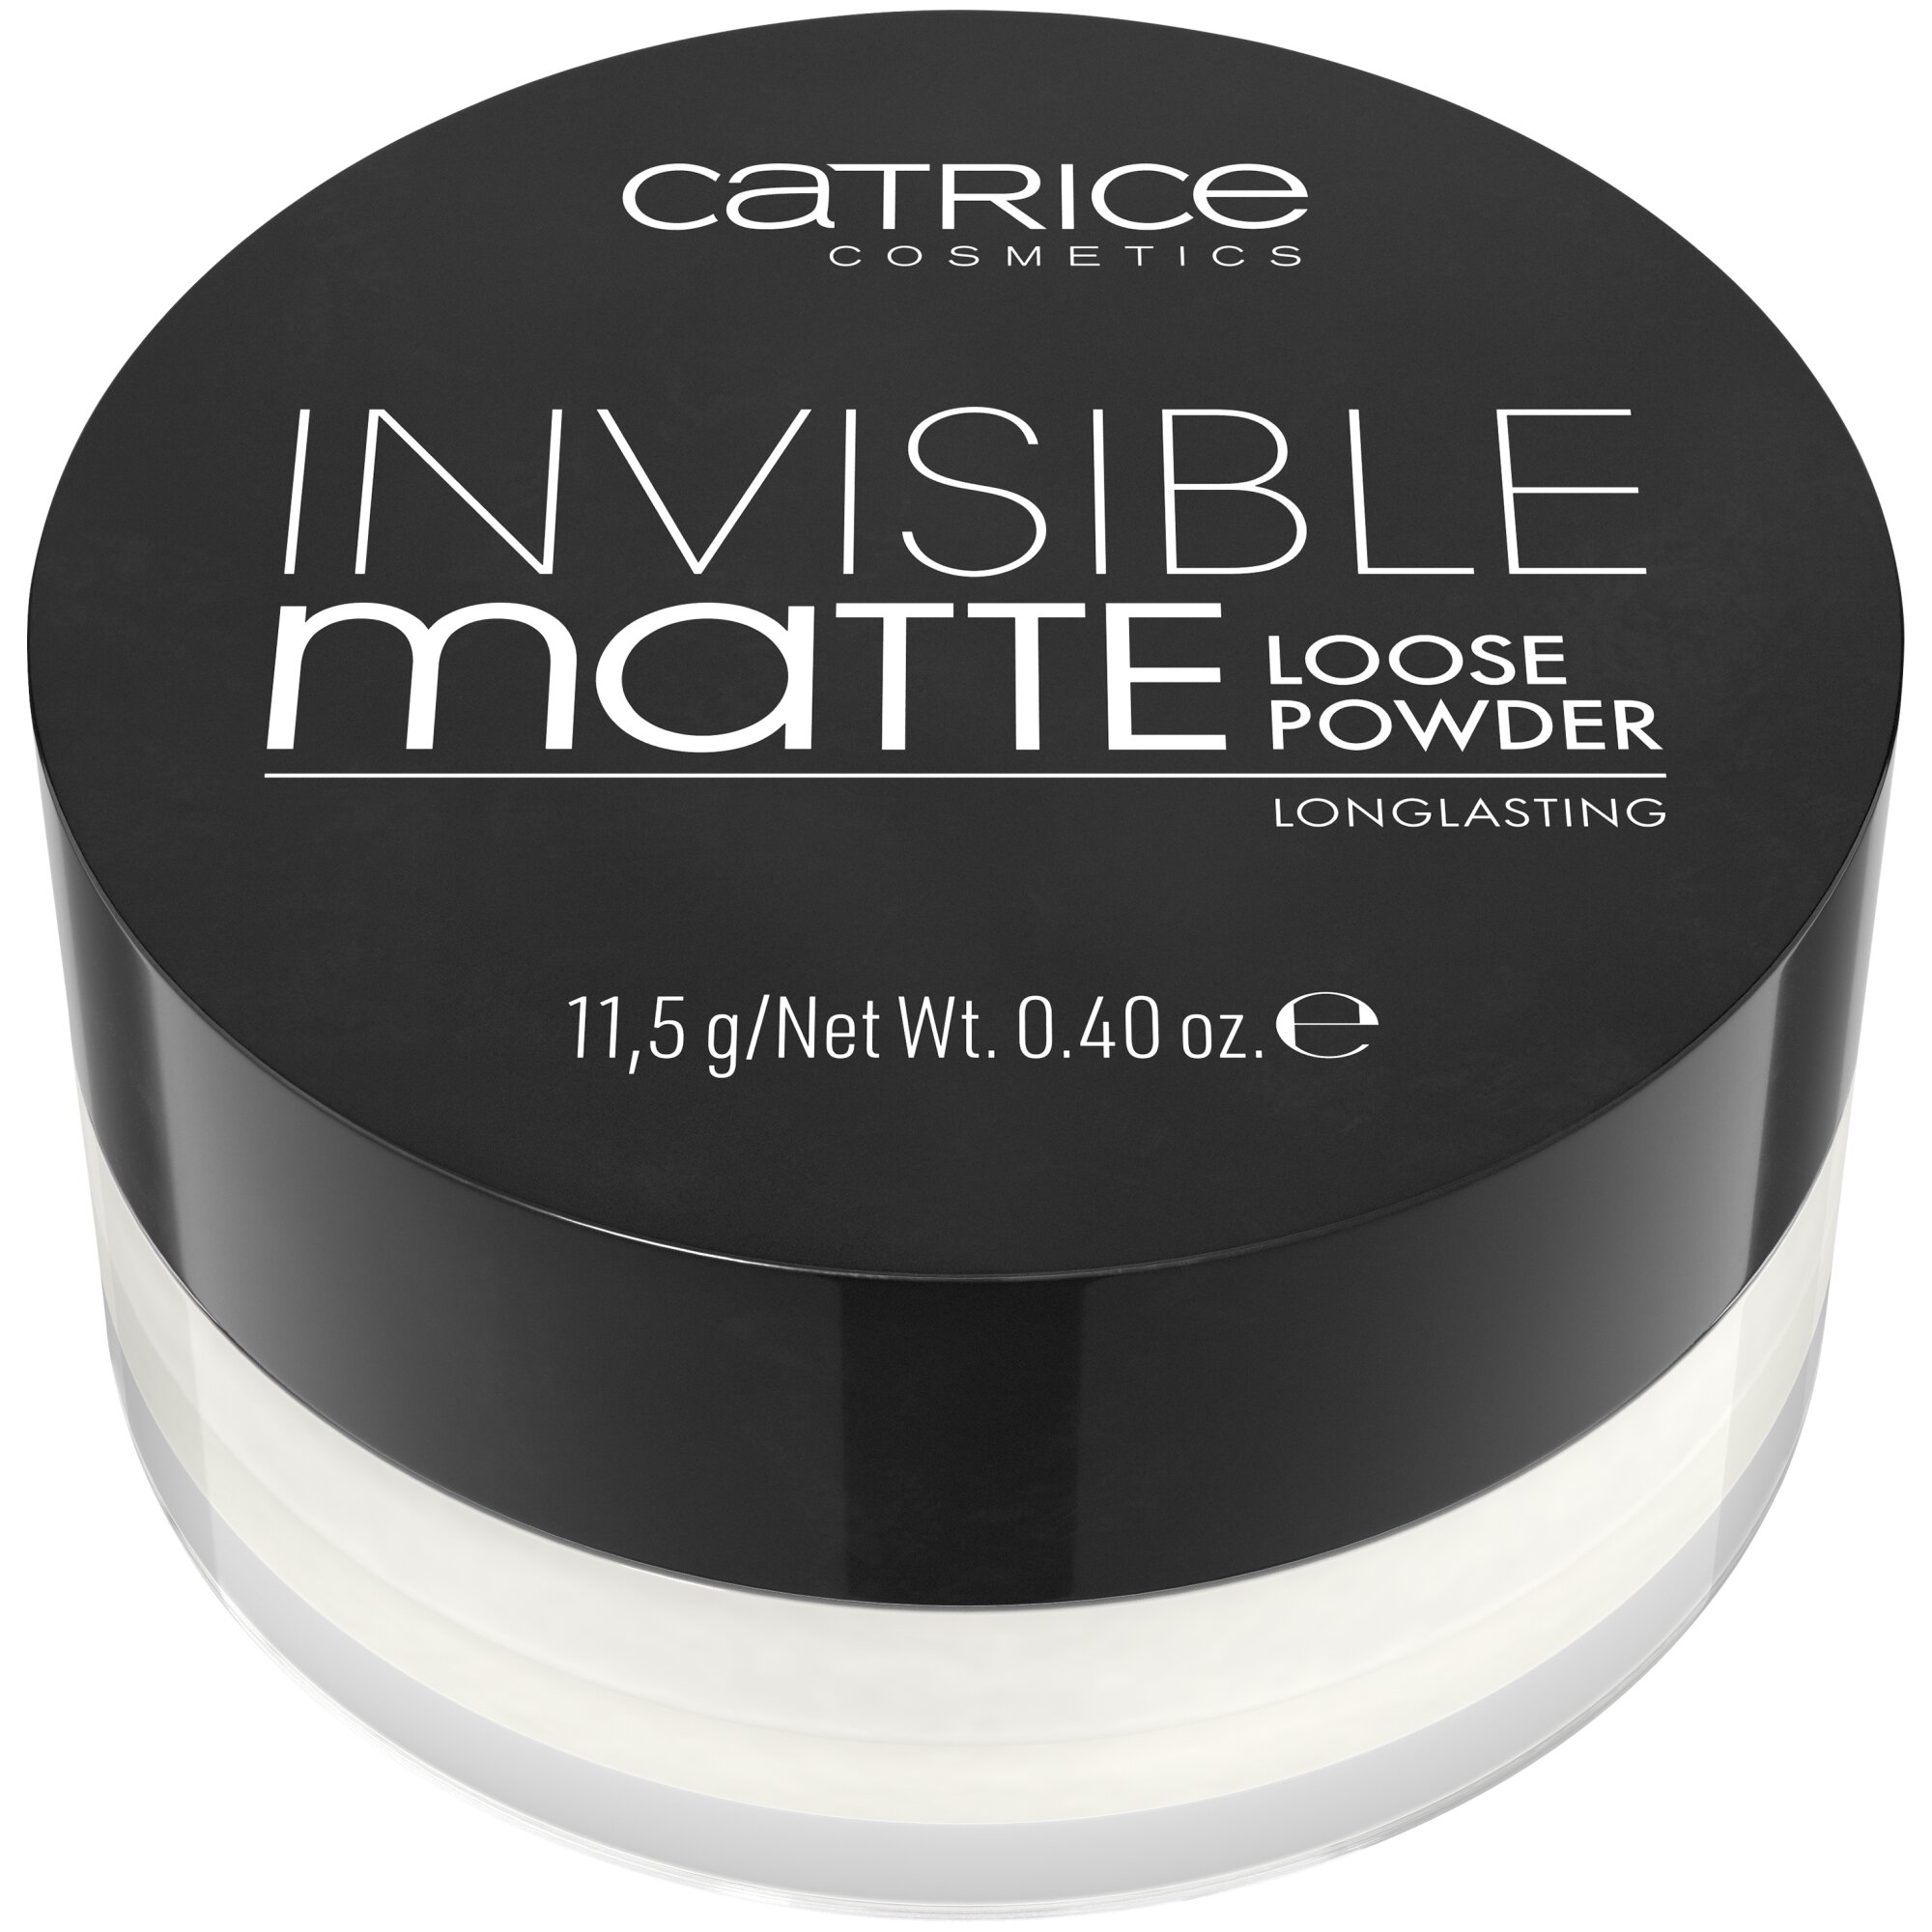 Pudra translucida Invisible Matte Loose Powder, 001 - Universal, 11.5 g, Catrice